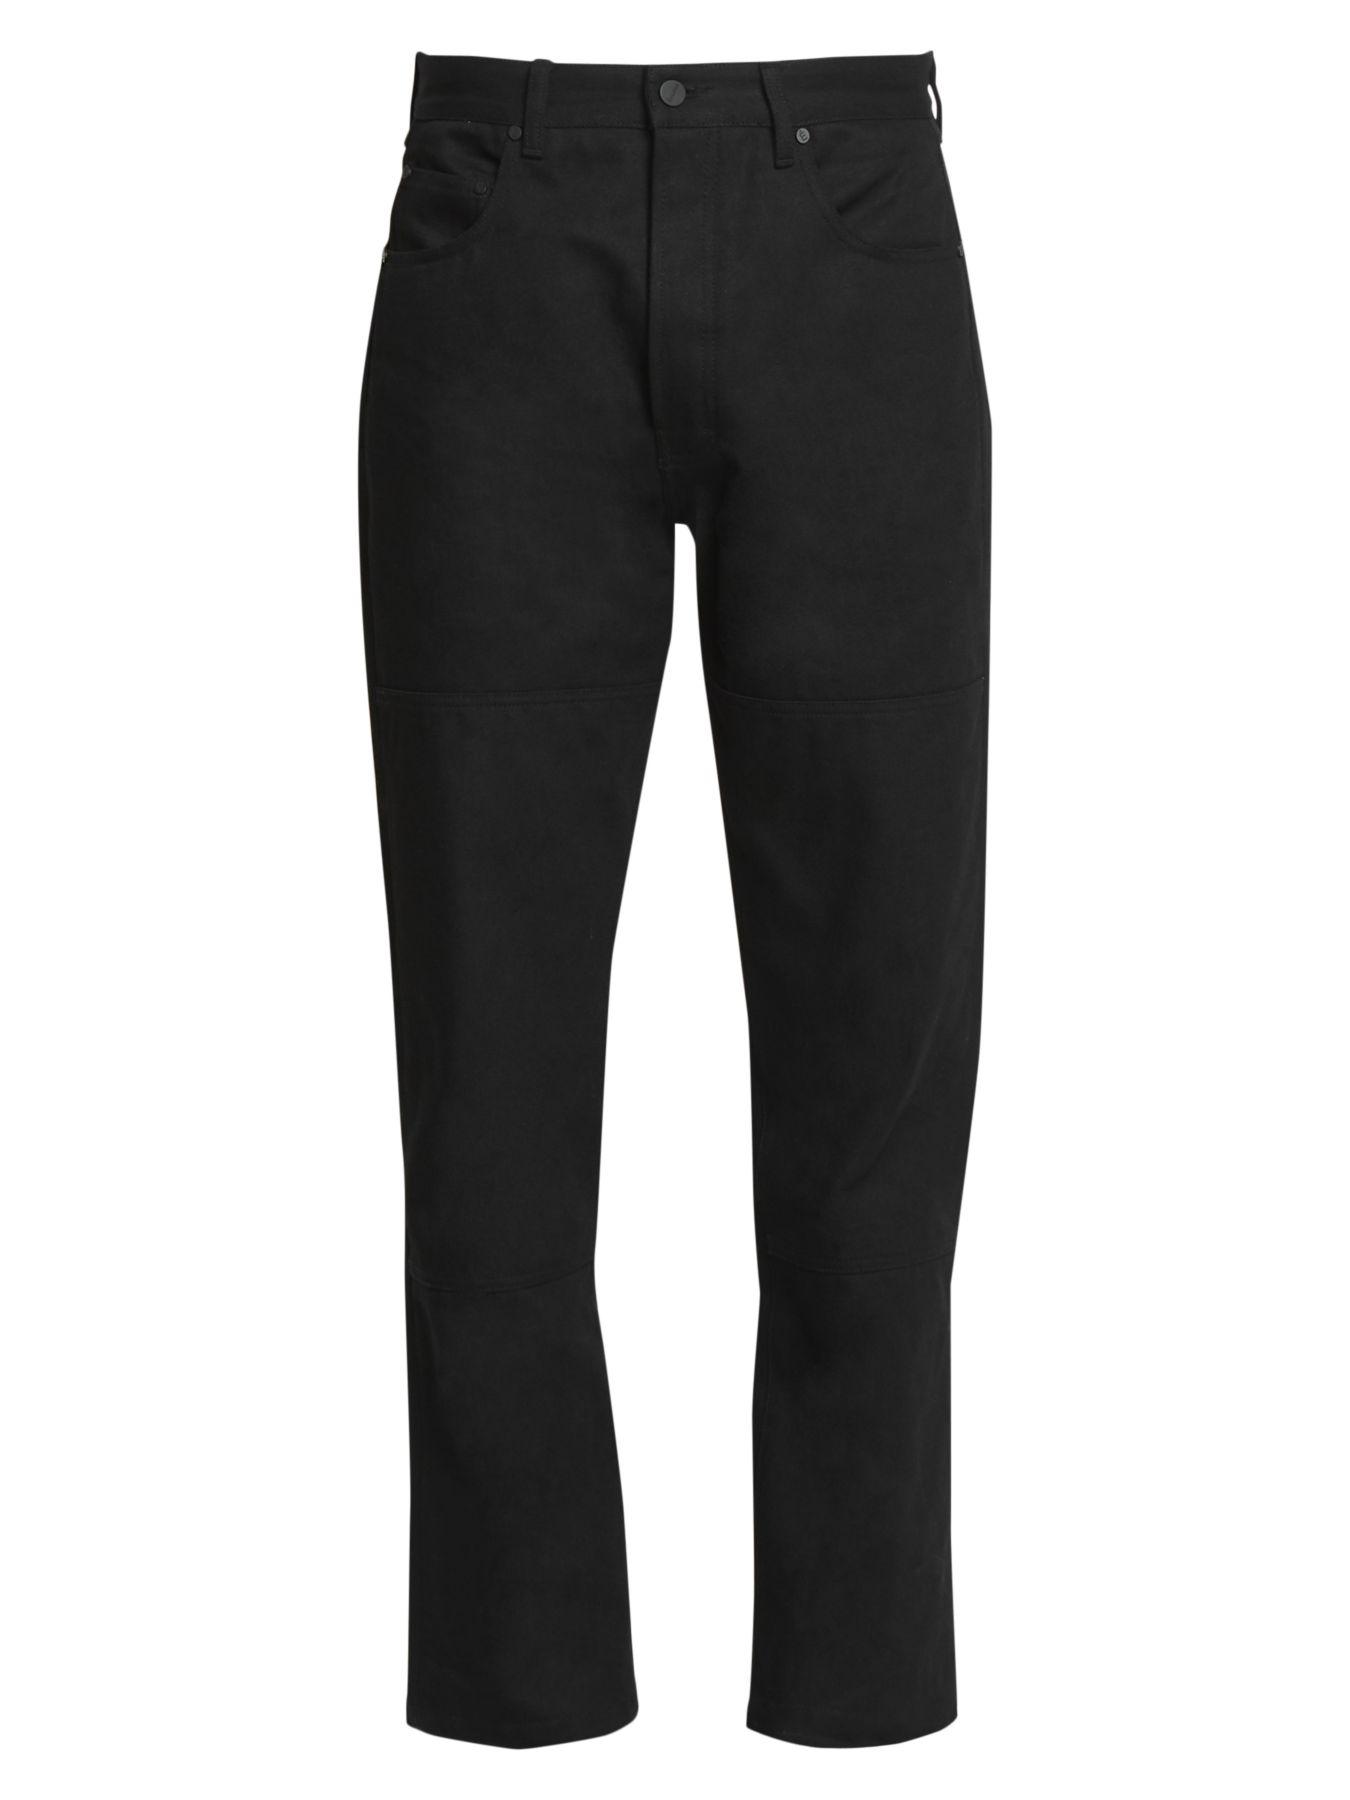 Etudes Studio Denim X Keith Haring Straight Jeans in Black for Men - Lyst